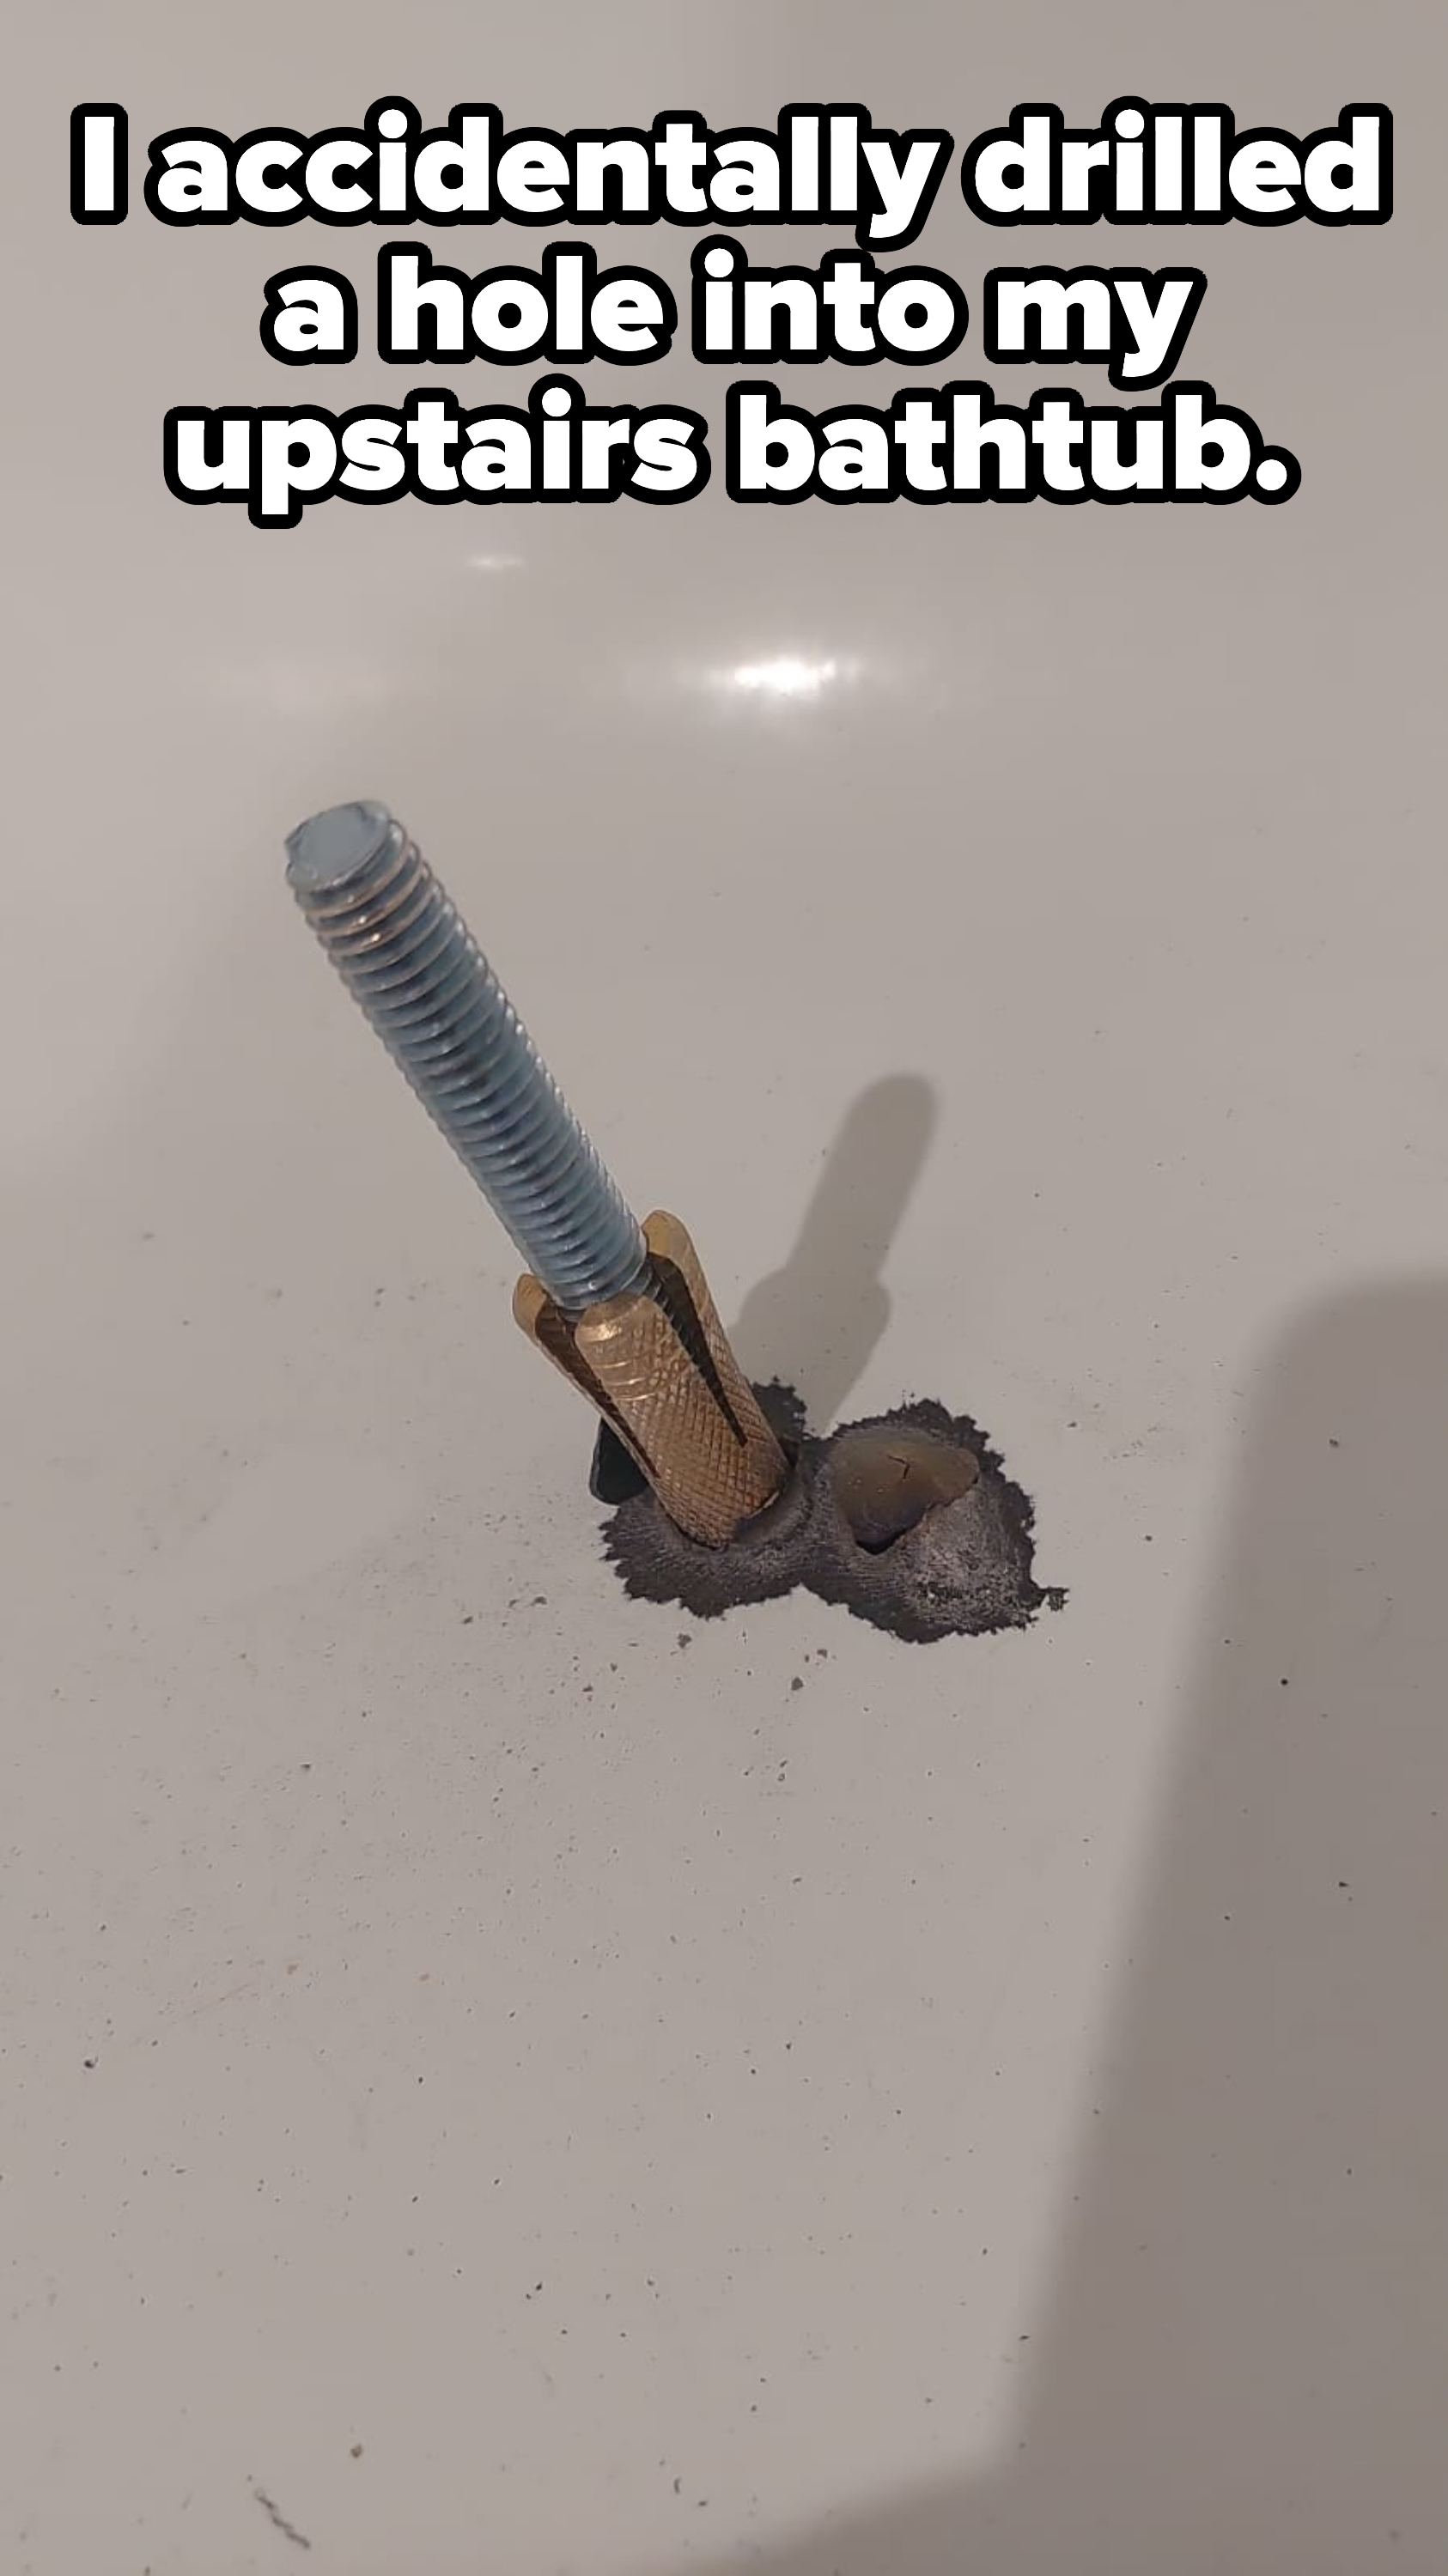 Person accidentally drills a hole through their upstairs bathtub